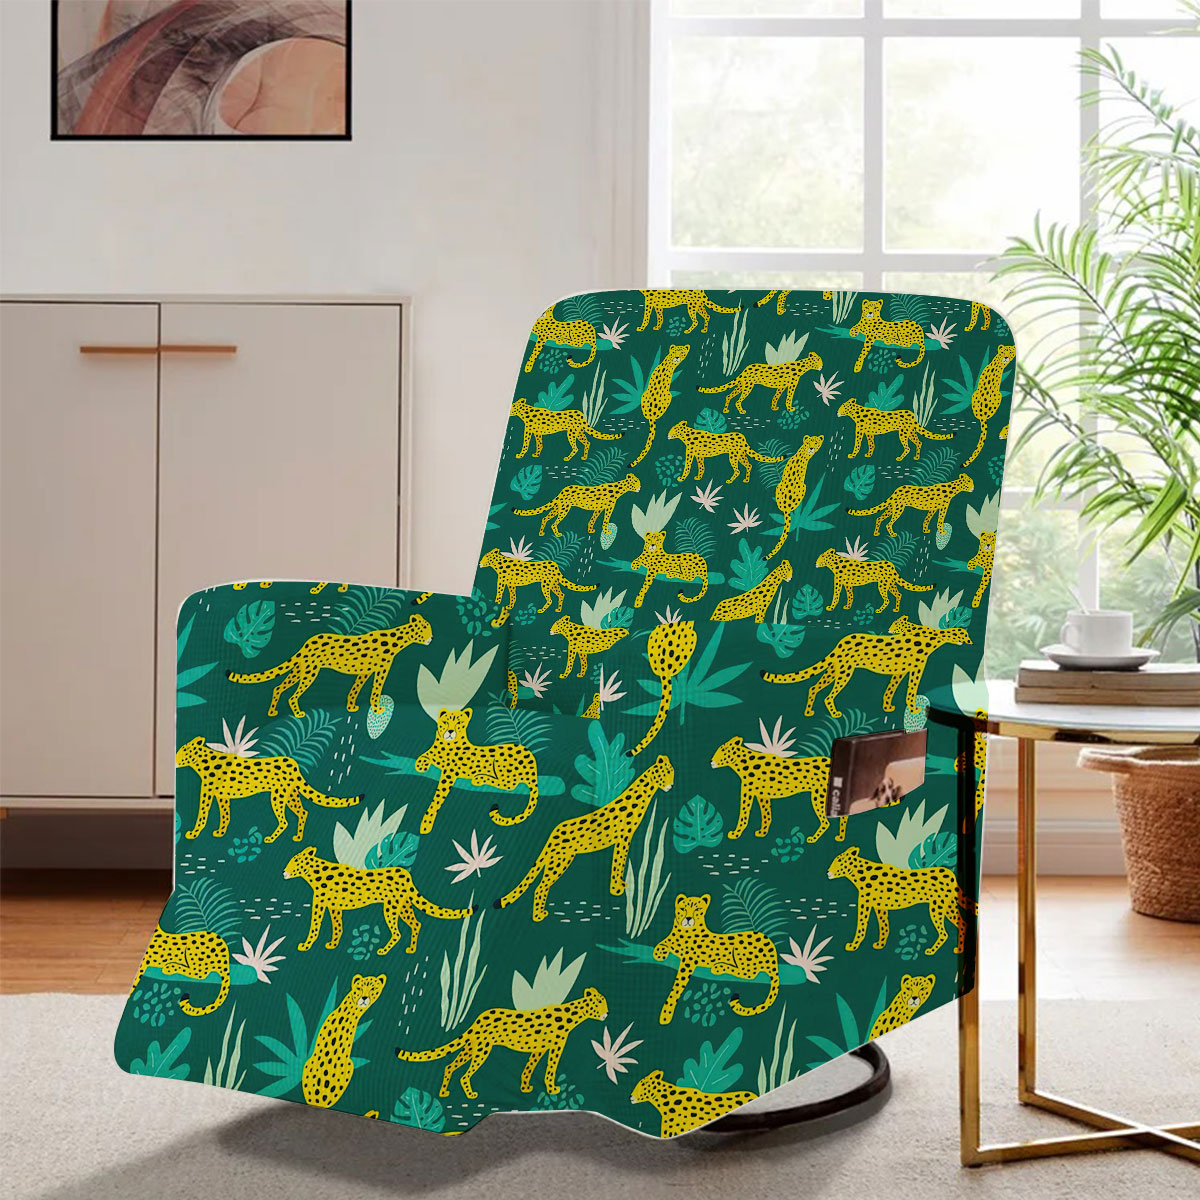 Cartoon Yellow Leopard Recliner Slipcover